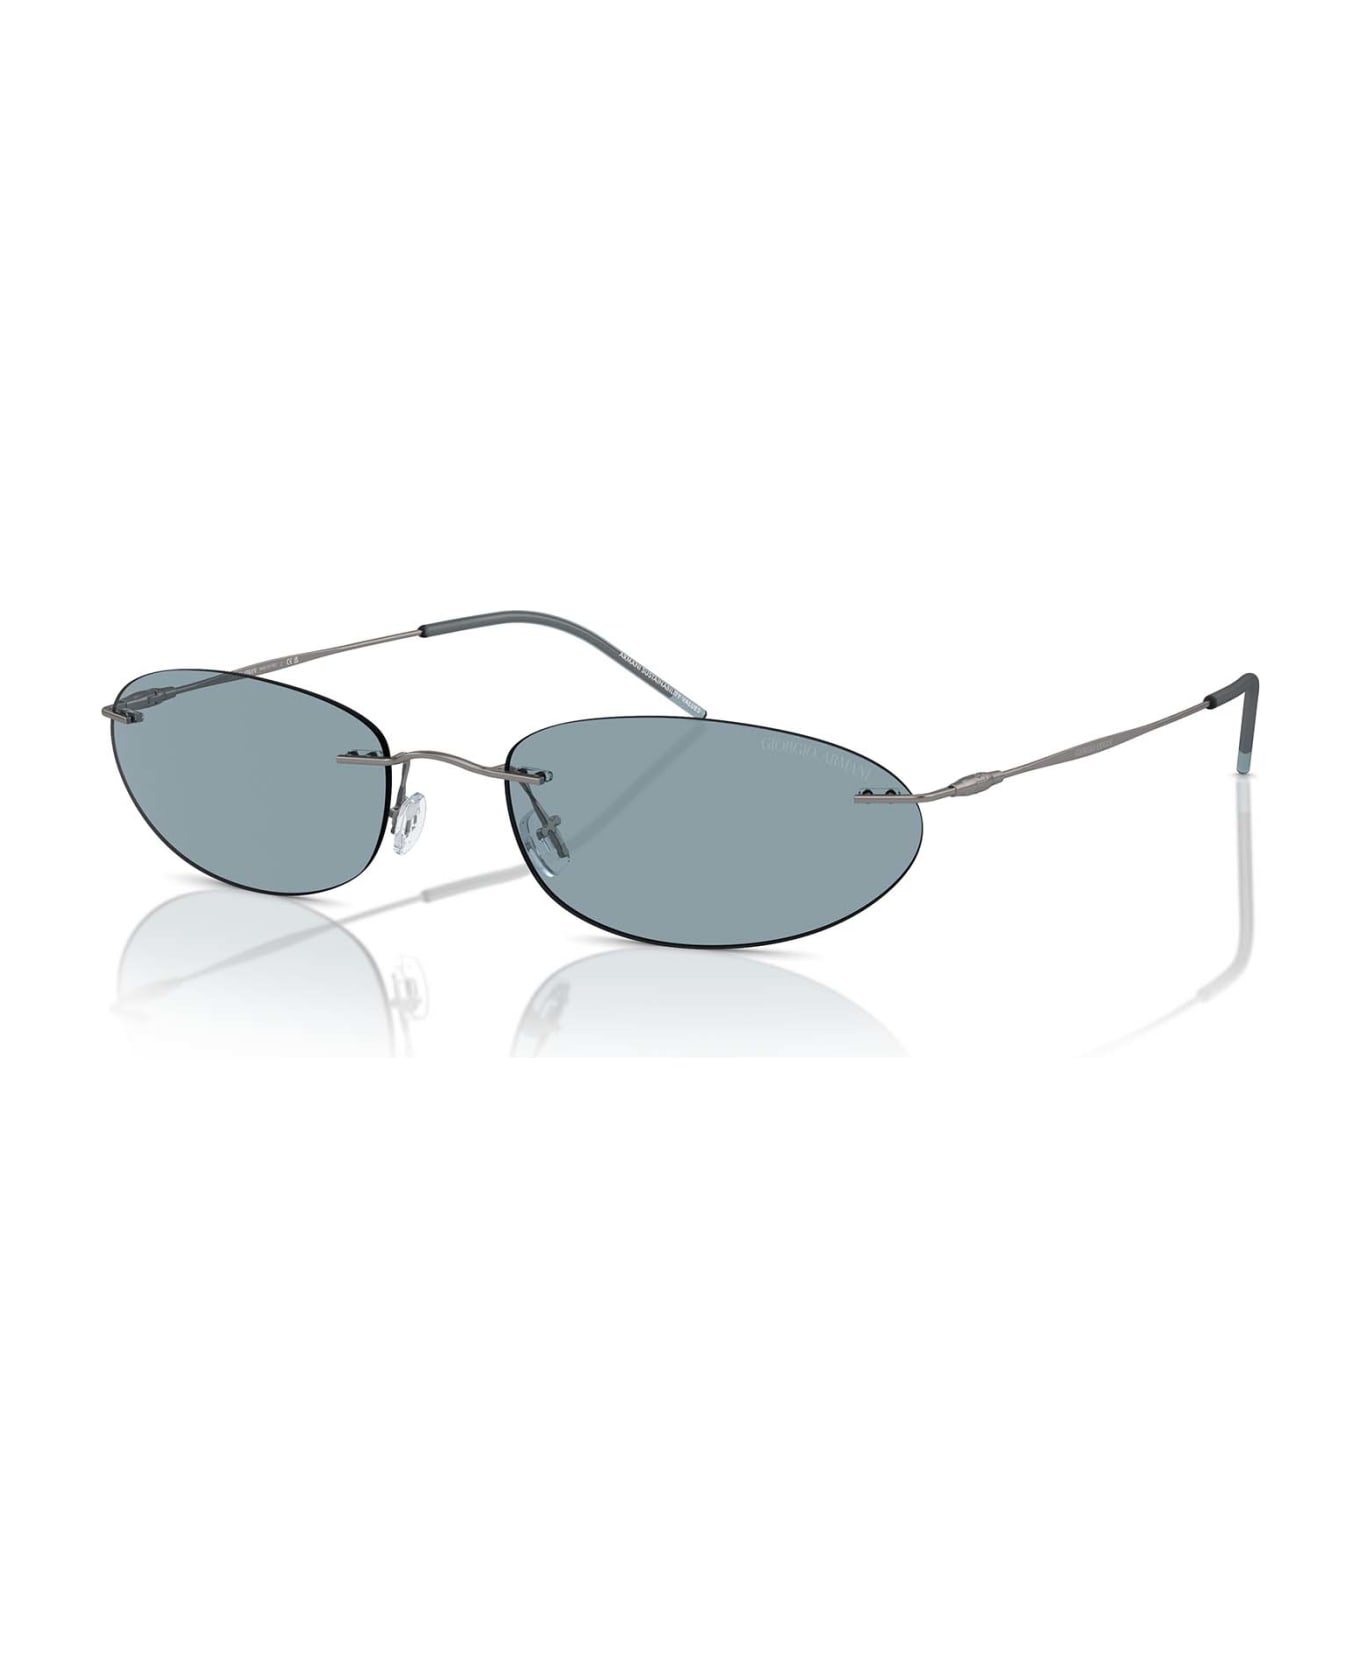 Giorgio Armani Ar1508m Matte Gunmetal Sunglasses - Matte Gunmetal